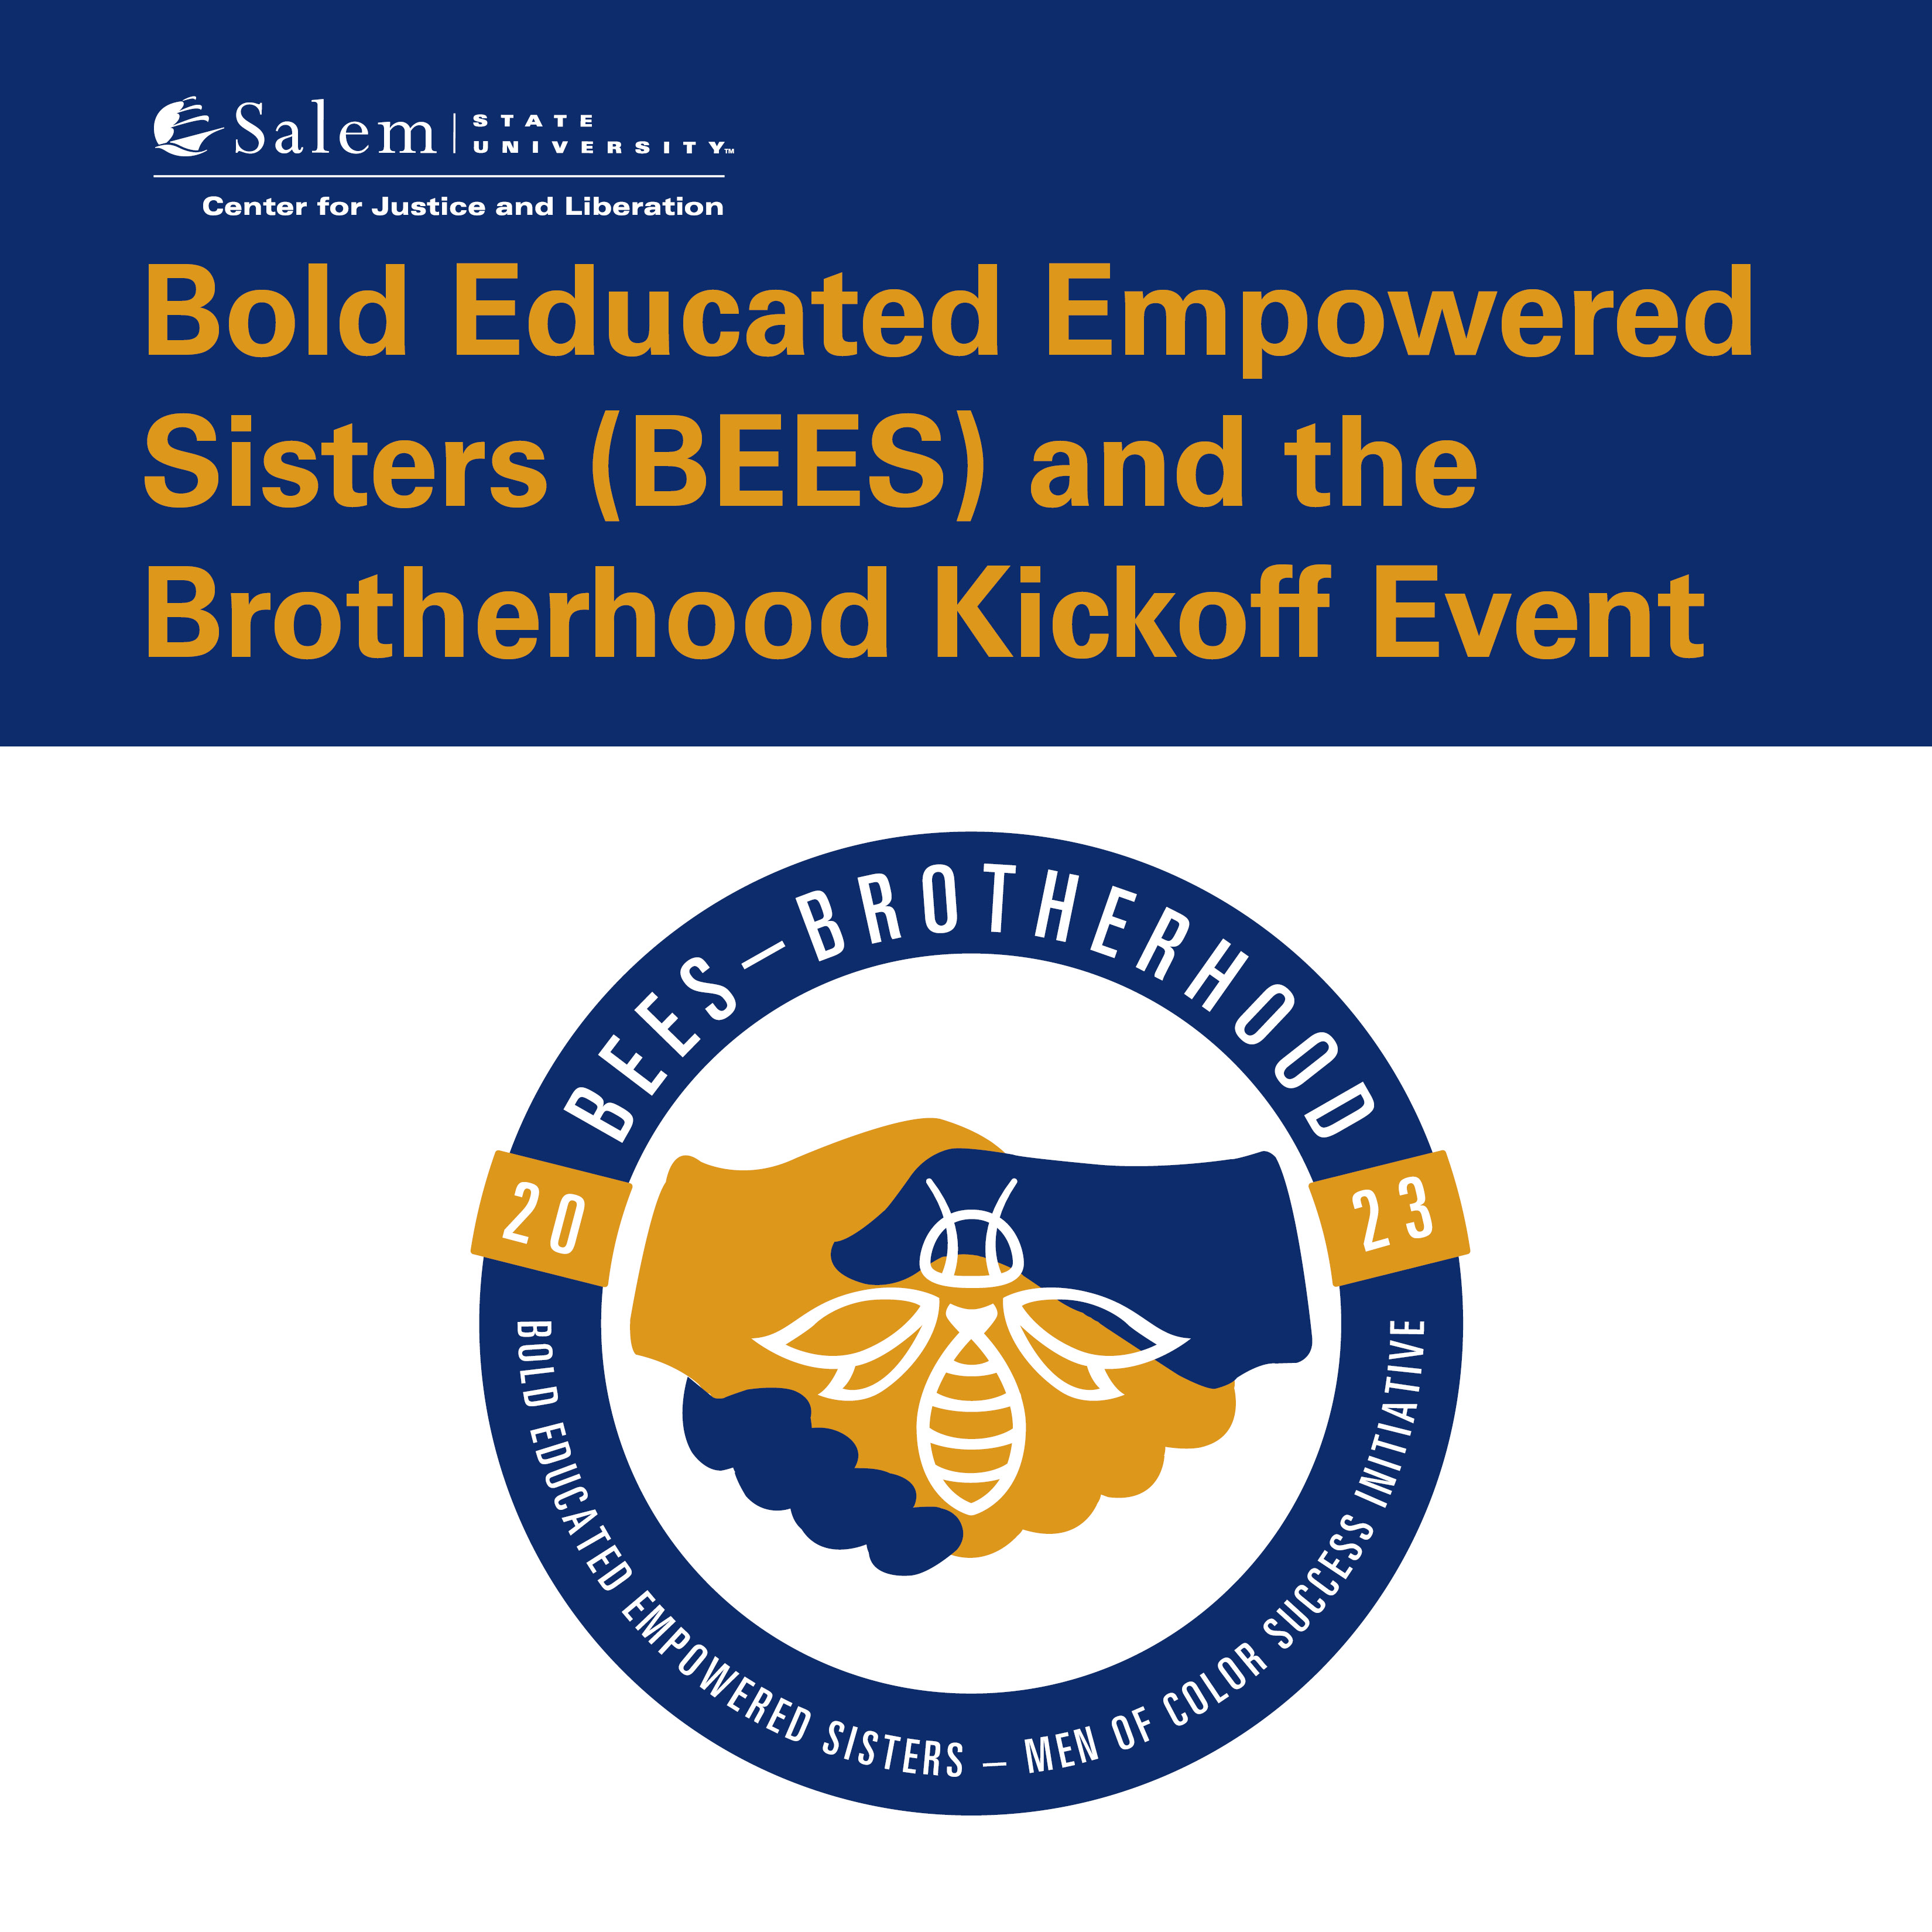 BEES and The Brotherhood